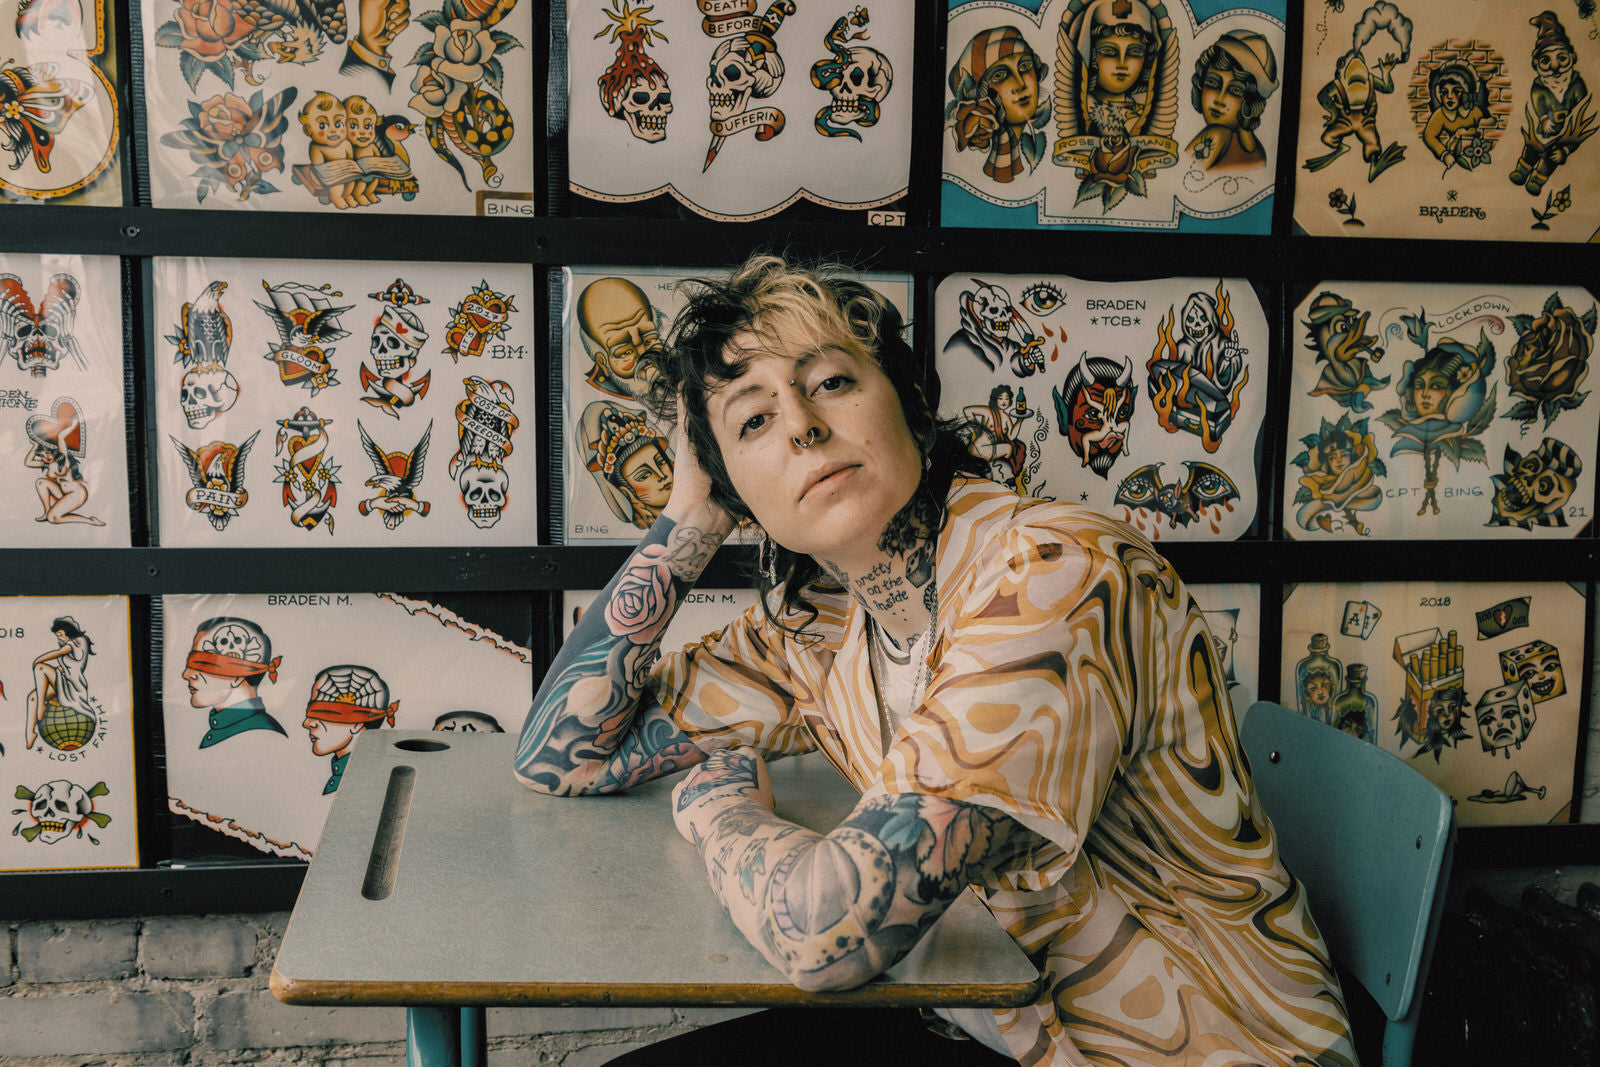 tattoo parlor – Cool San Diego Sights!